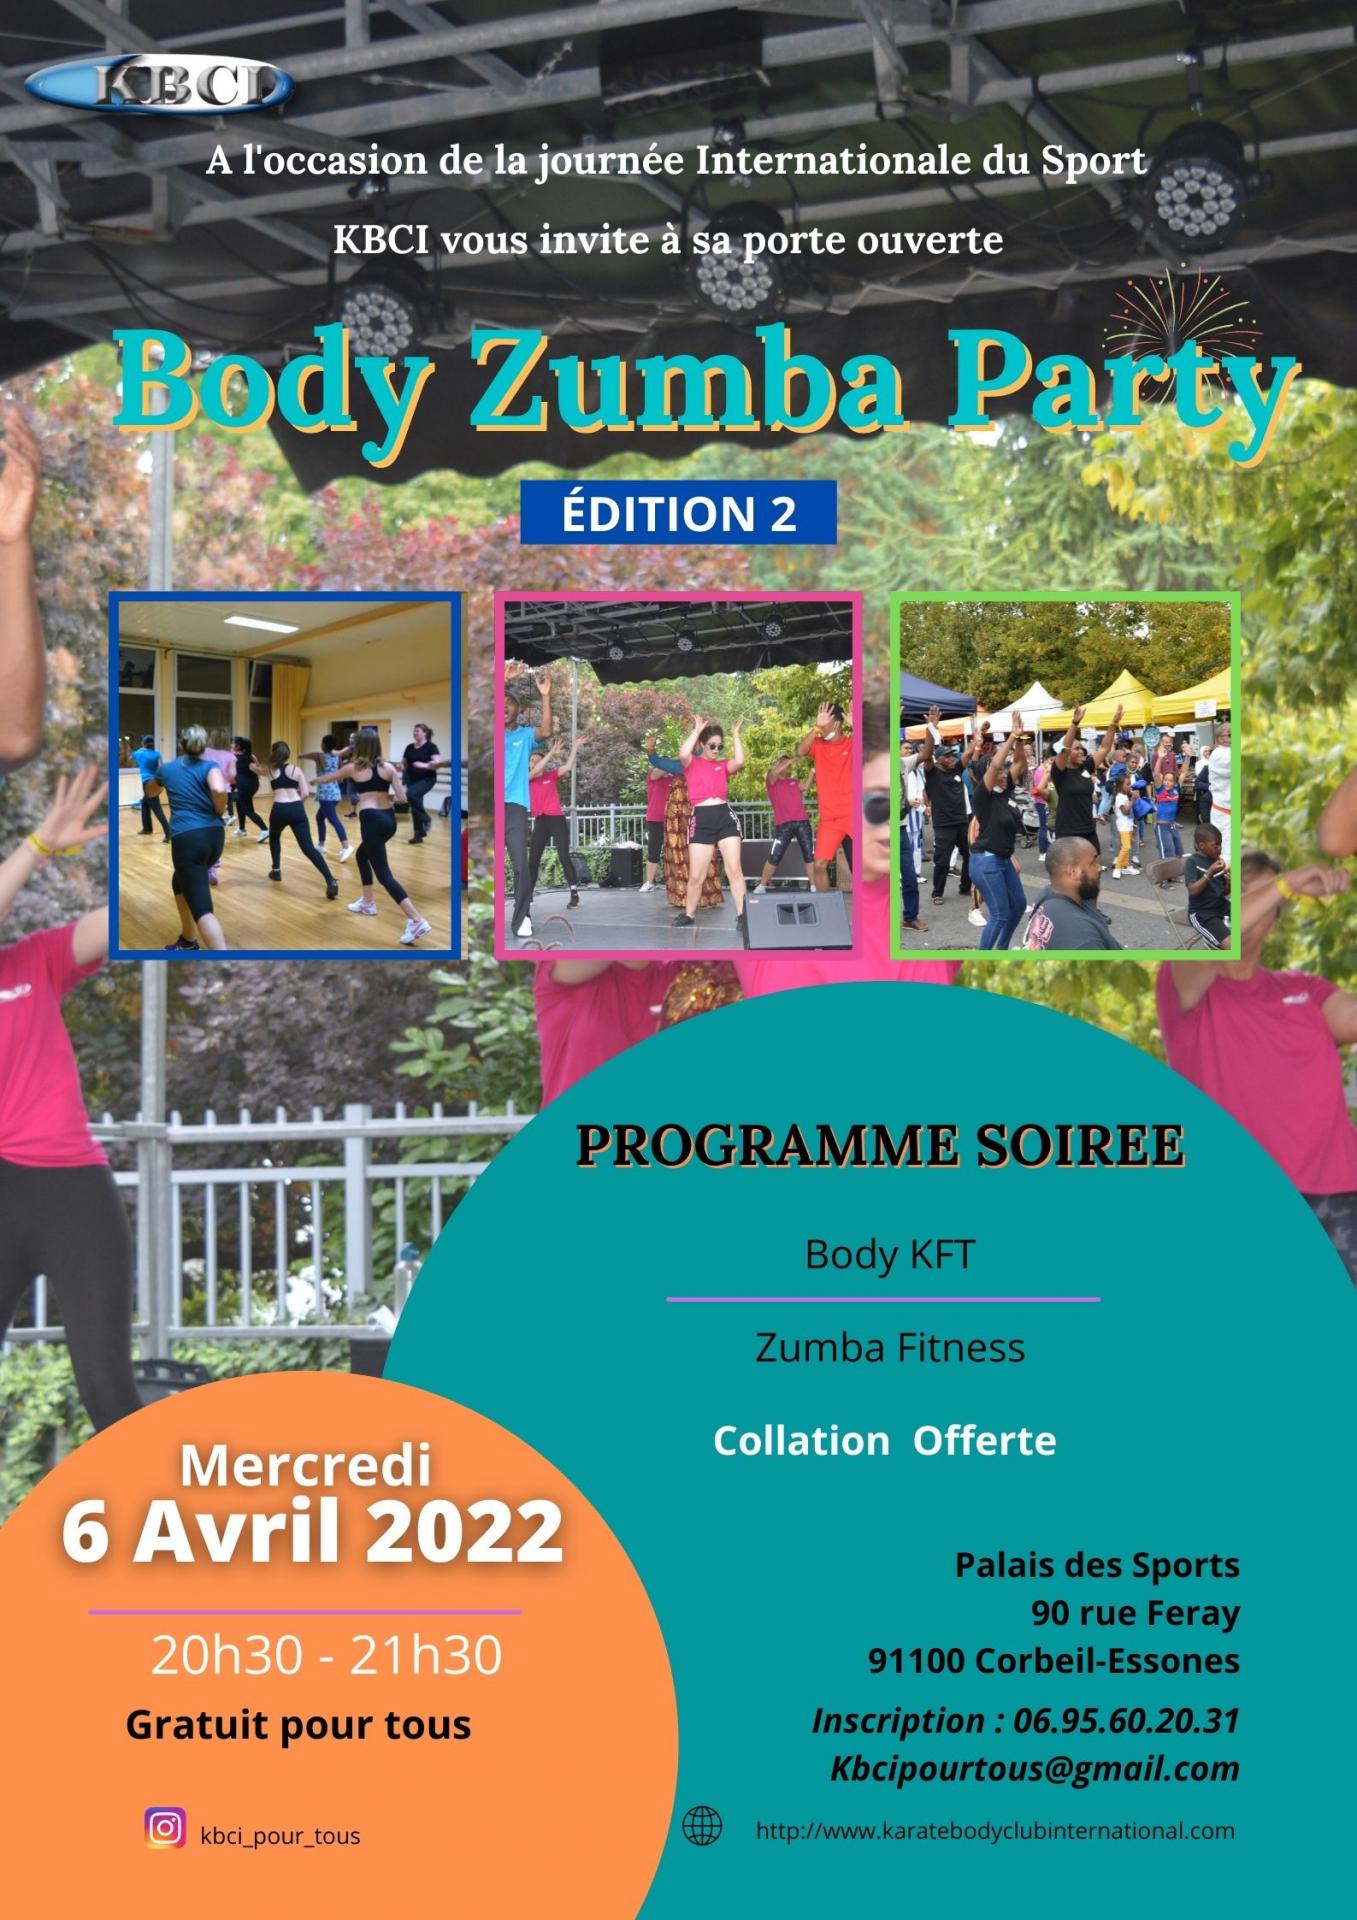 Body zumba party ed 2